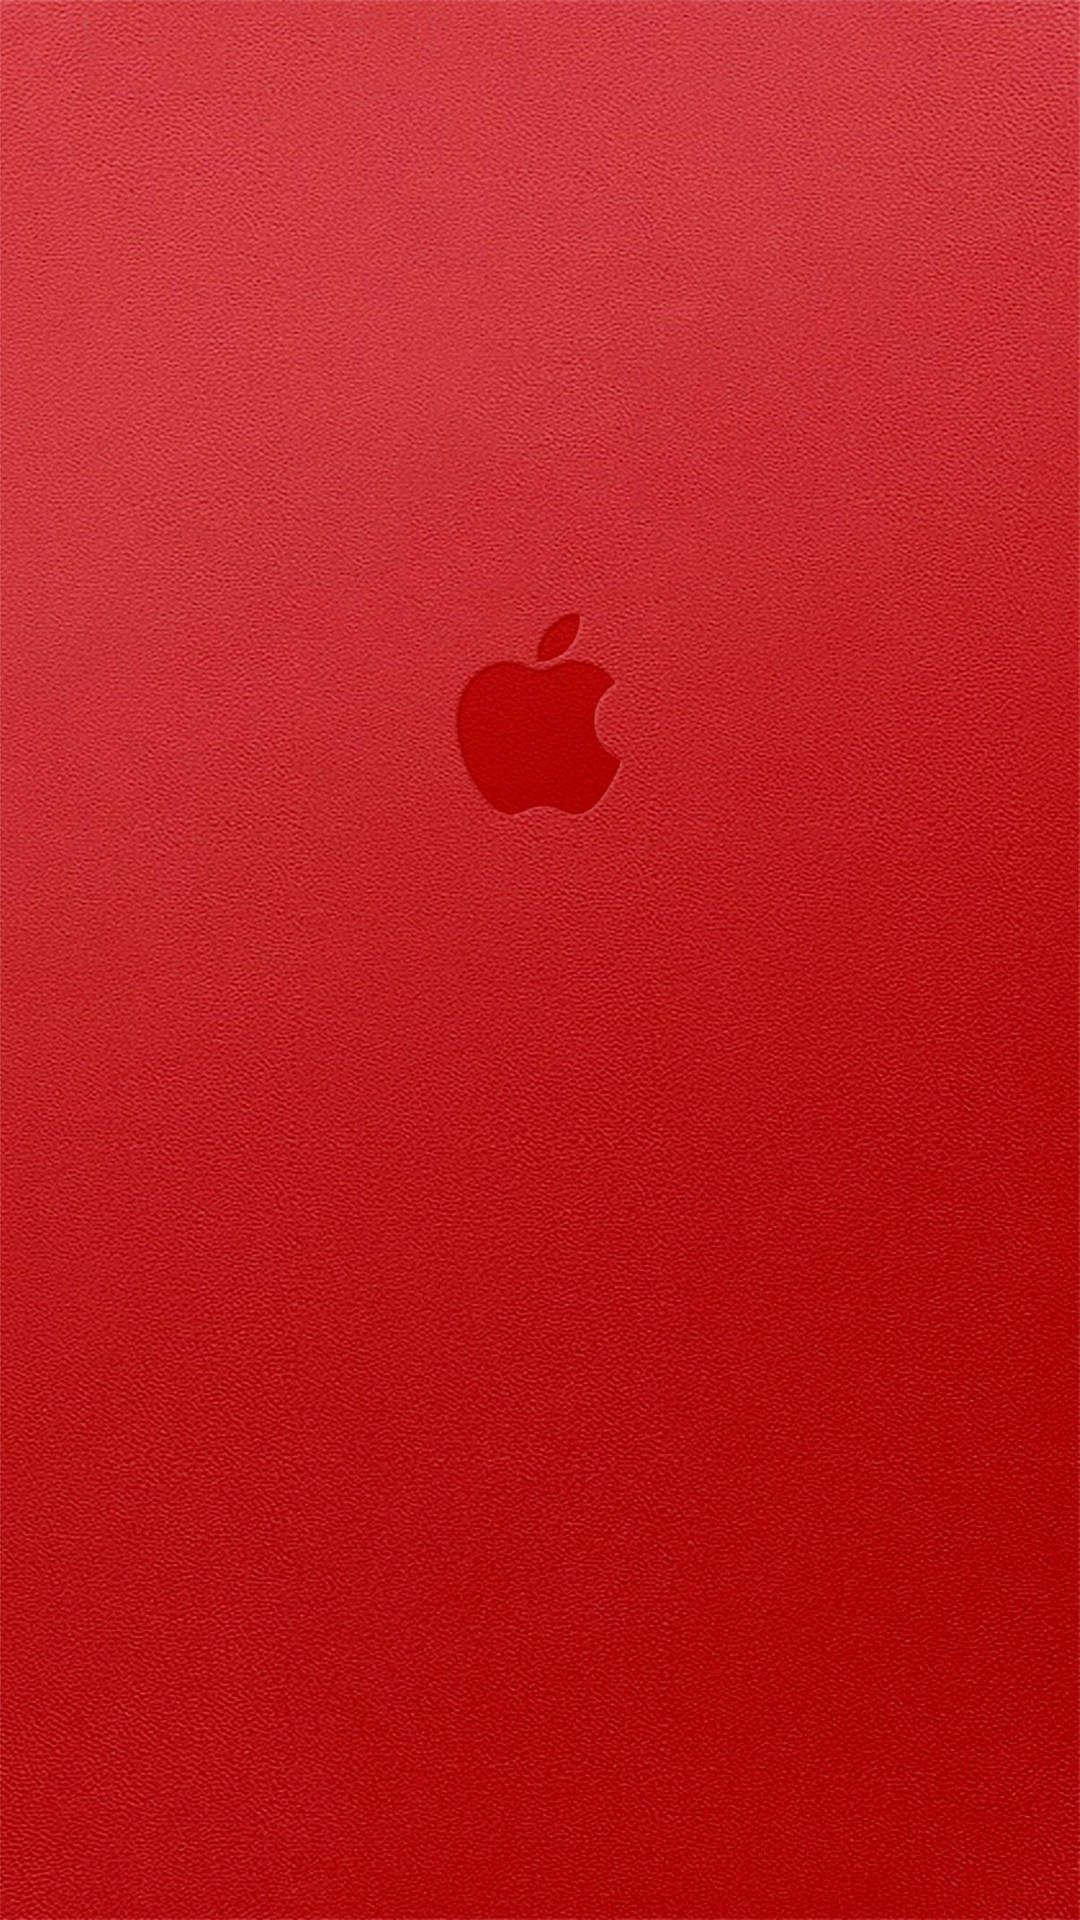 Iphone X Original Apple Logo On Red